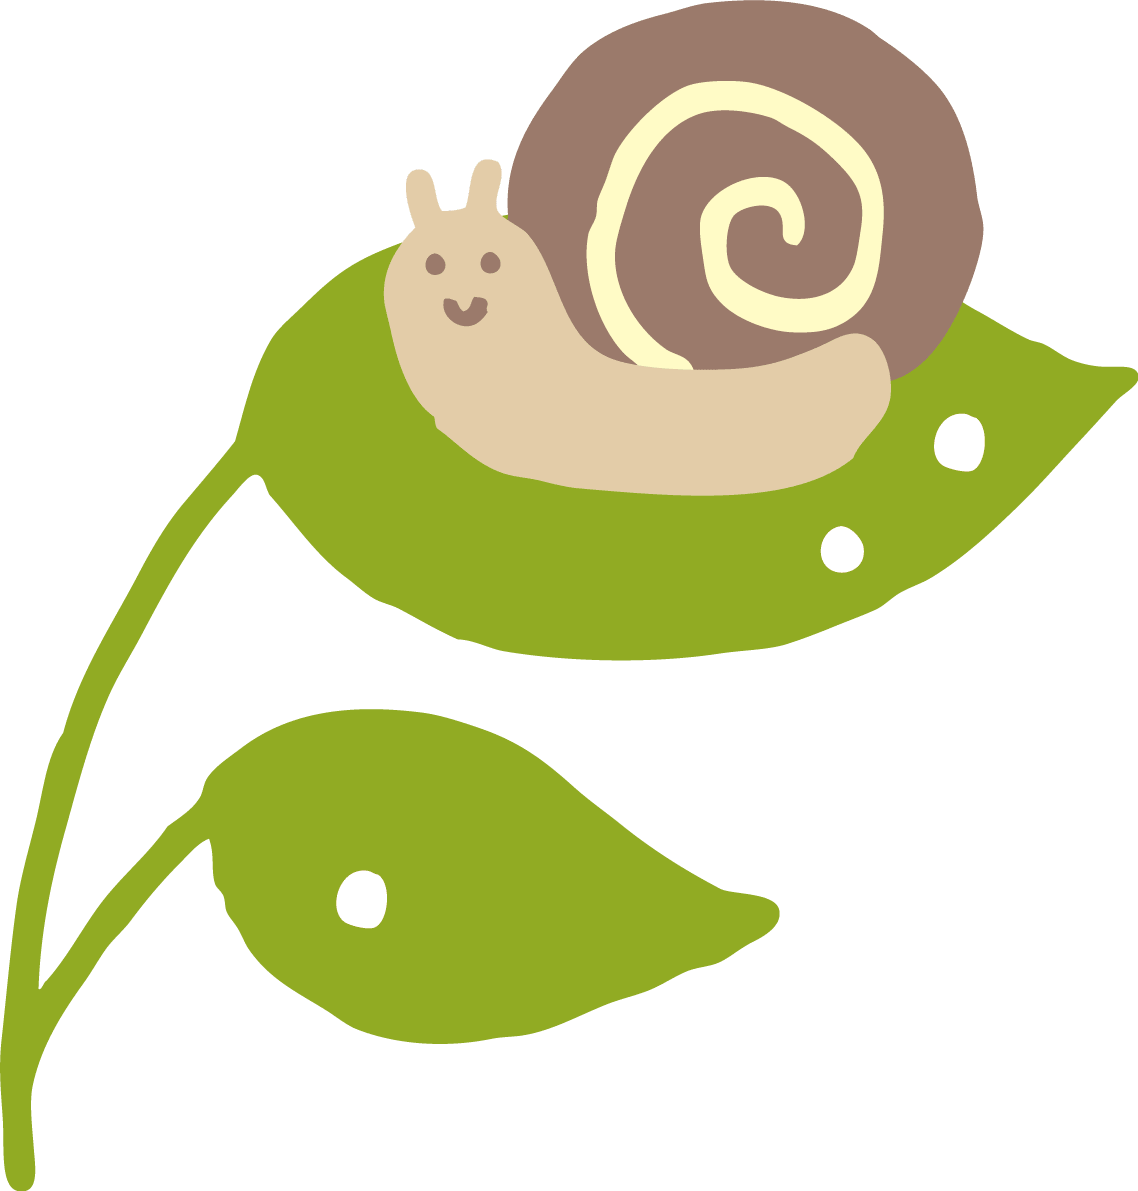 cute-rainy-season-of-snails-on-leaves-illustration-material-lots-of